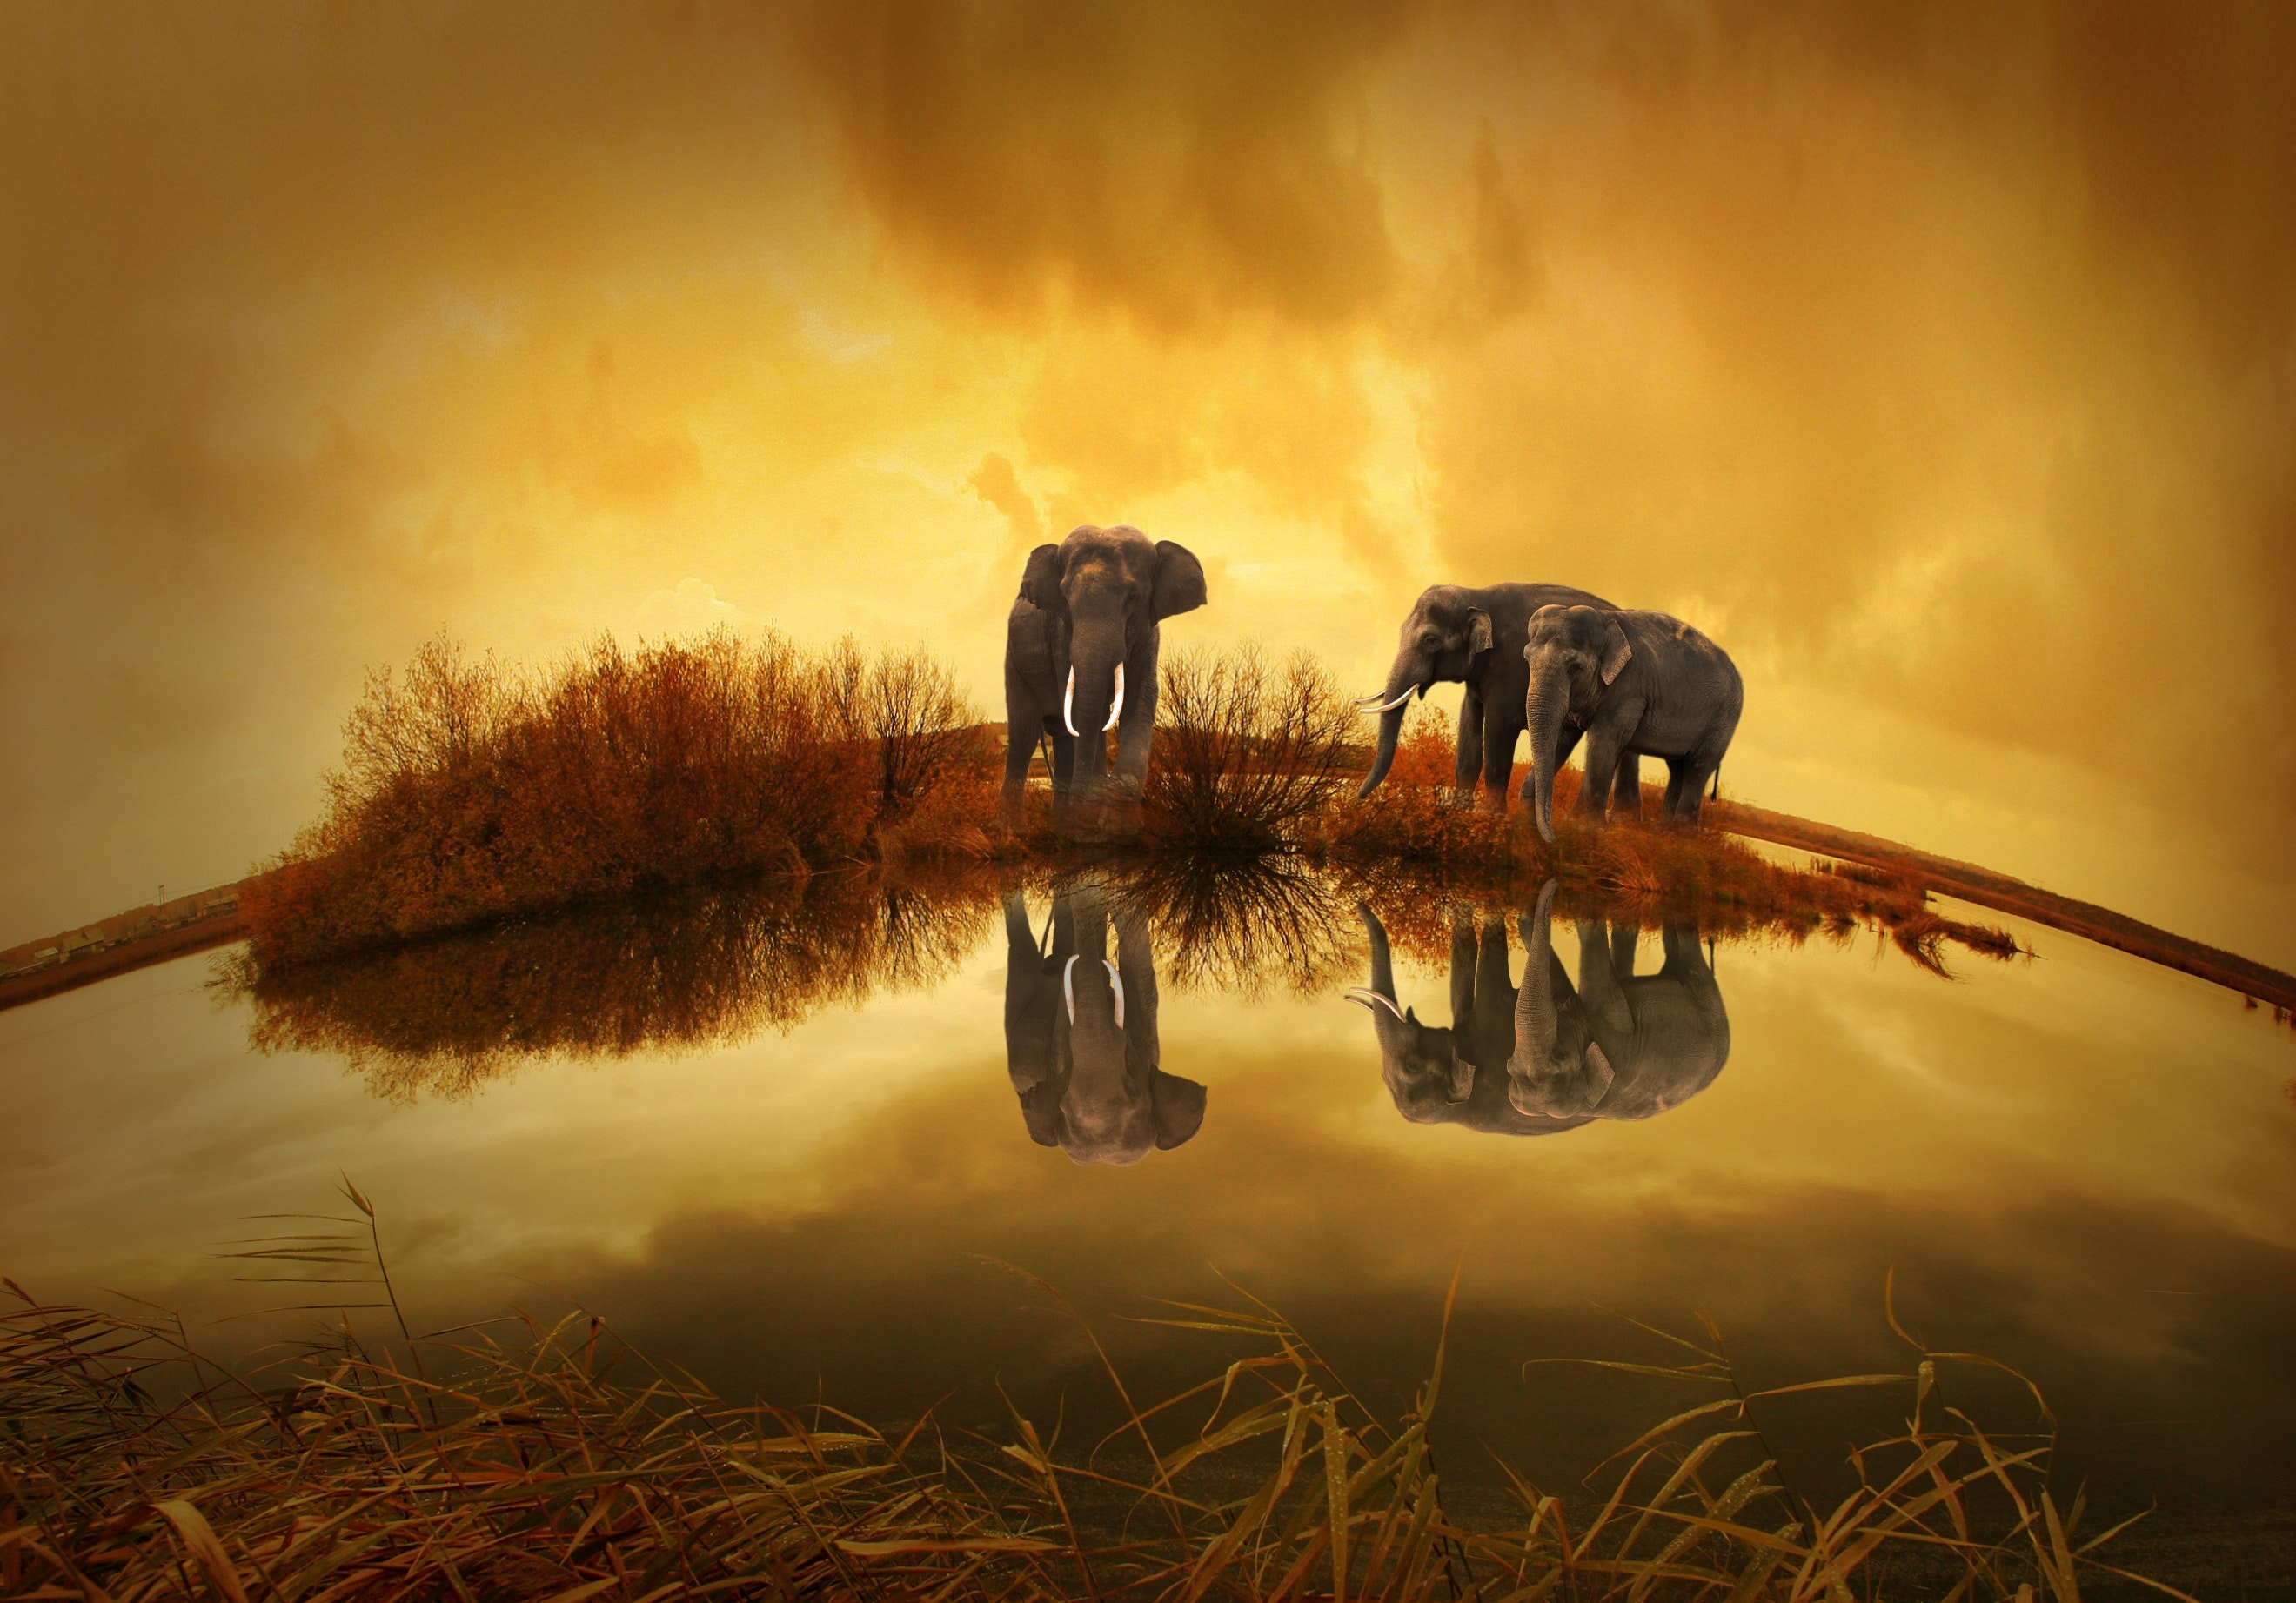 Best elephant images